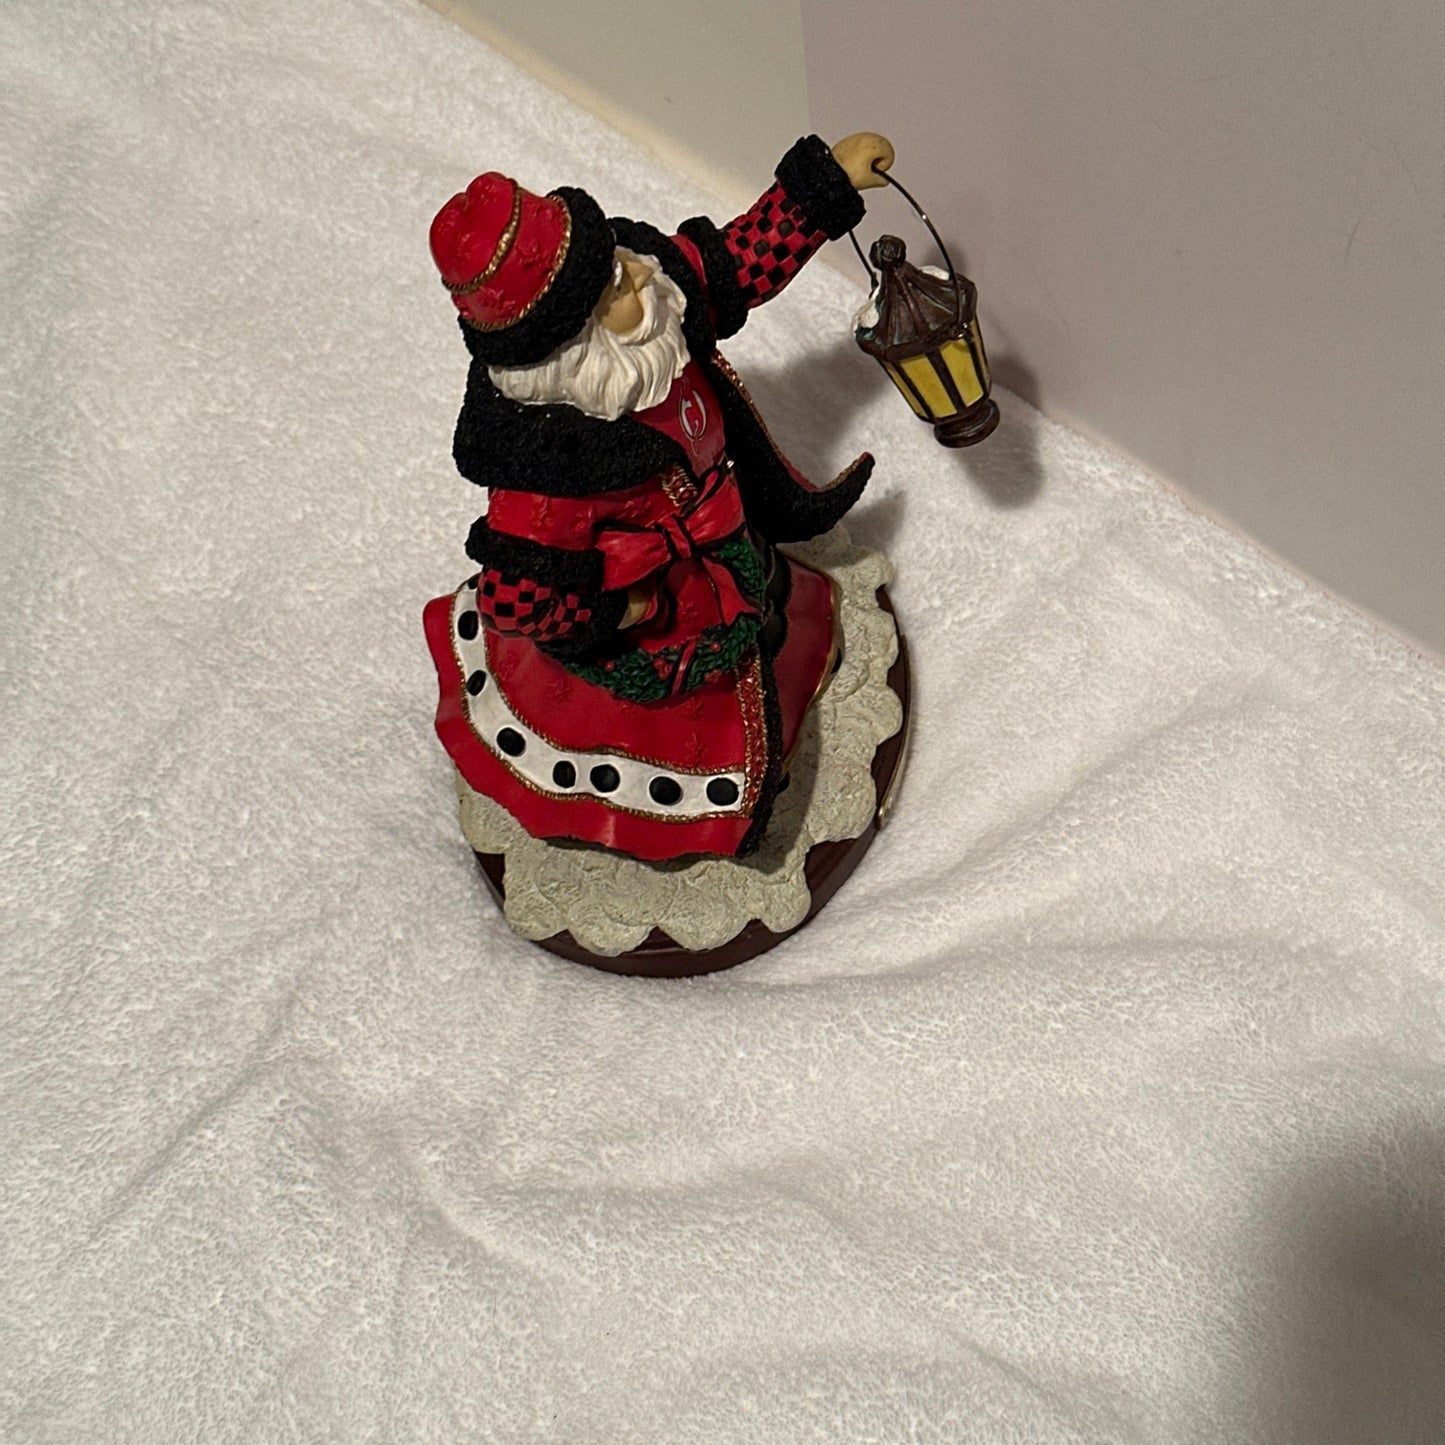 NJ Devils 4th Limited Series Memory Co. Figurine Old World Santa